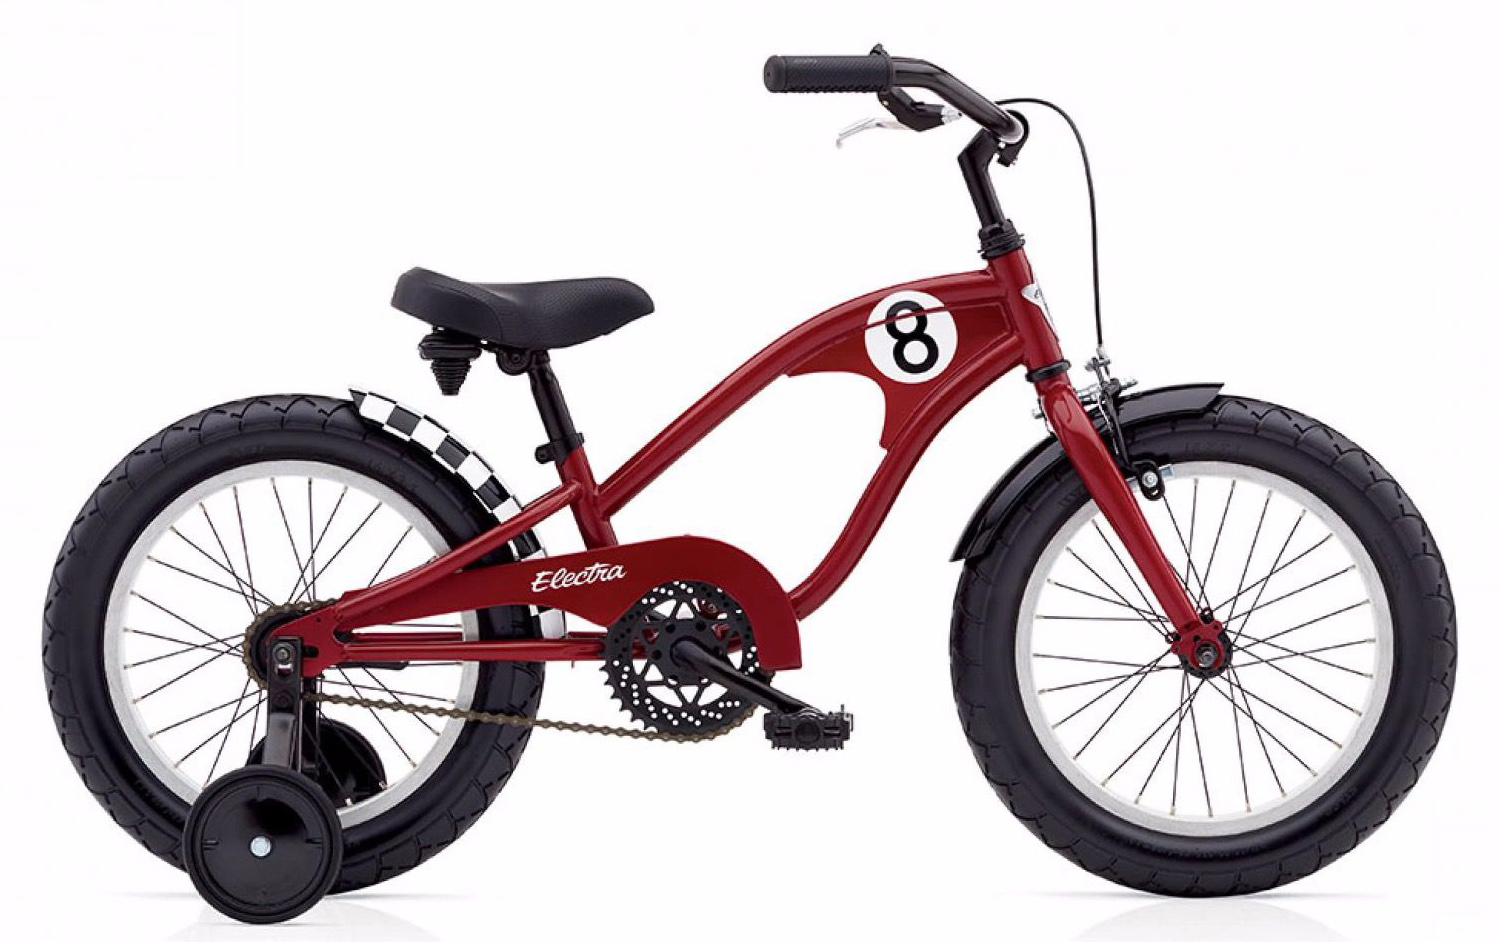  Велосипед Electra Straight 8 Kids '16 2019